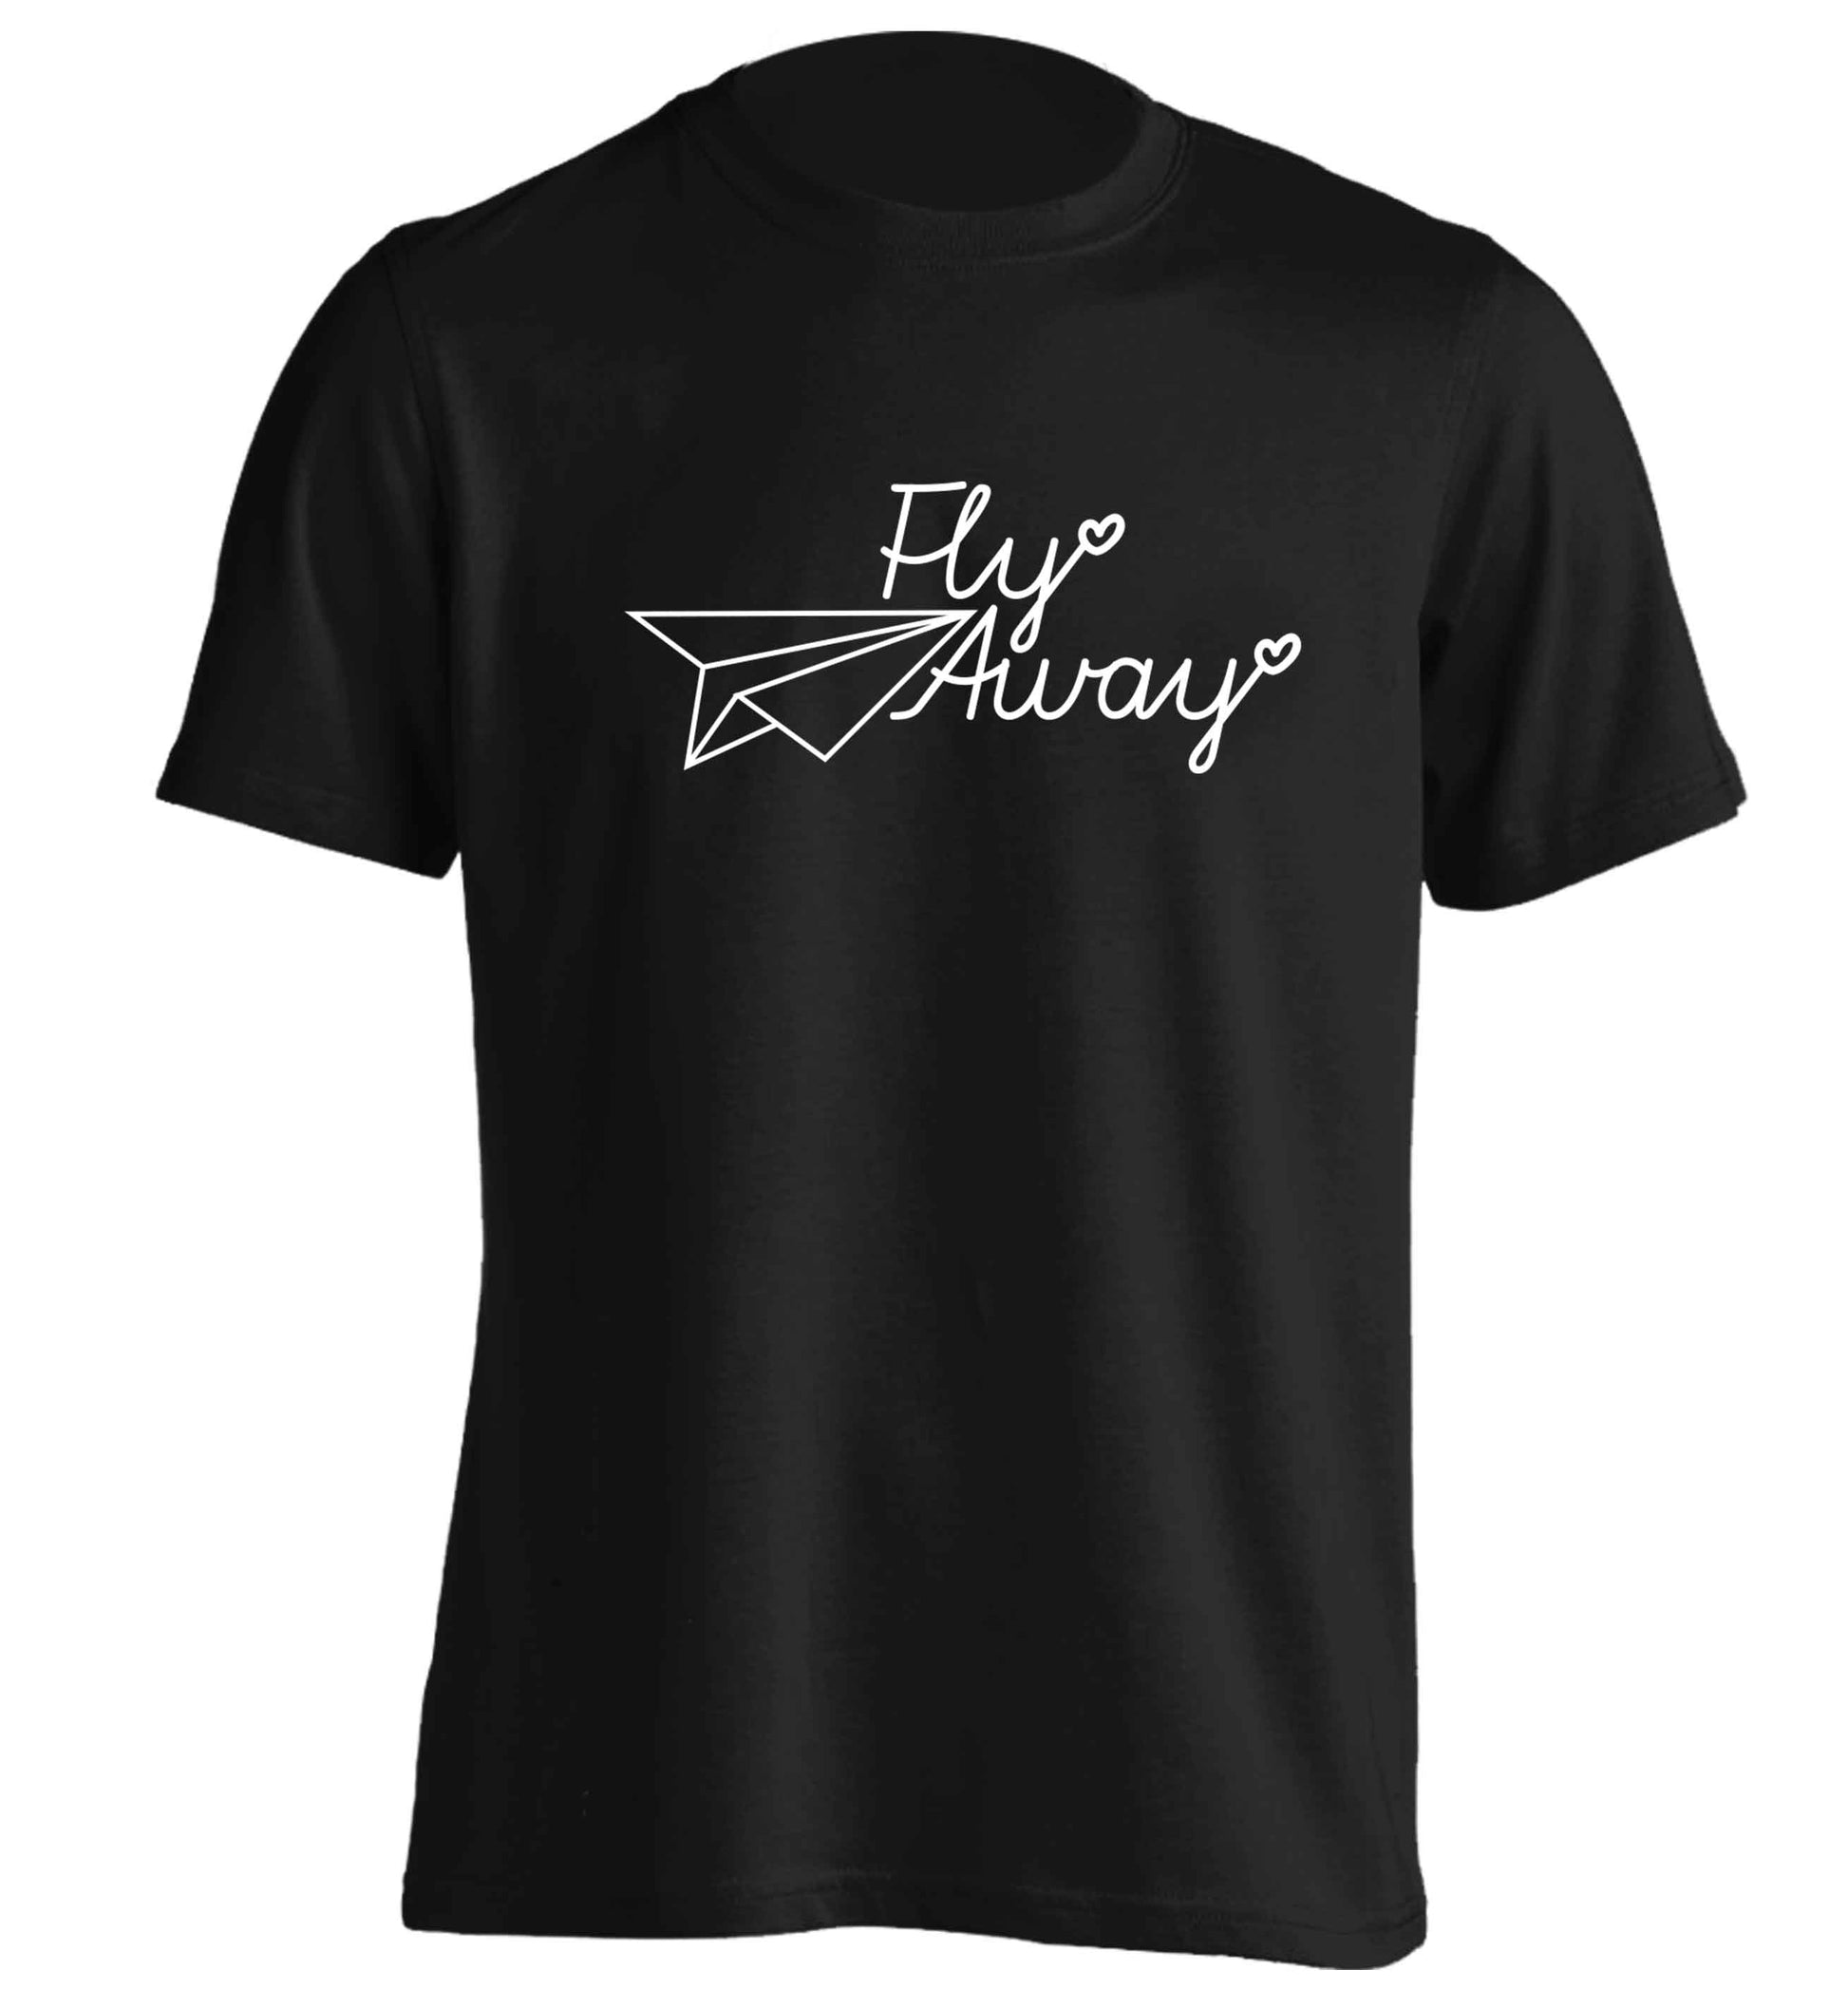 Fly away adults unisex black Tshirt 2XL